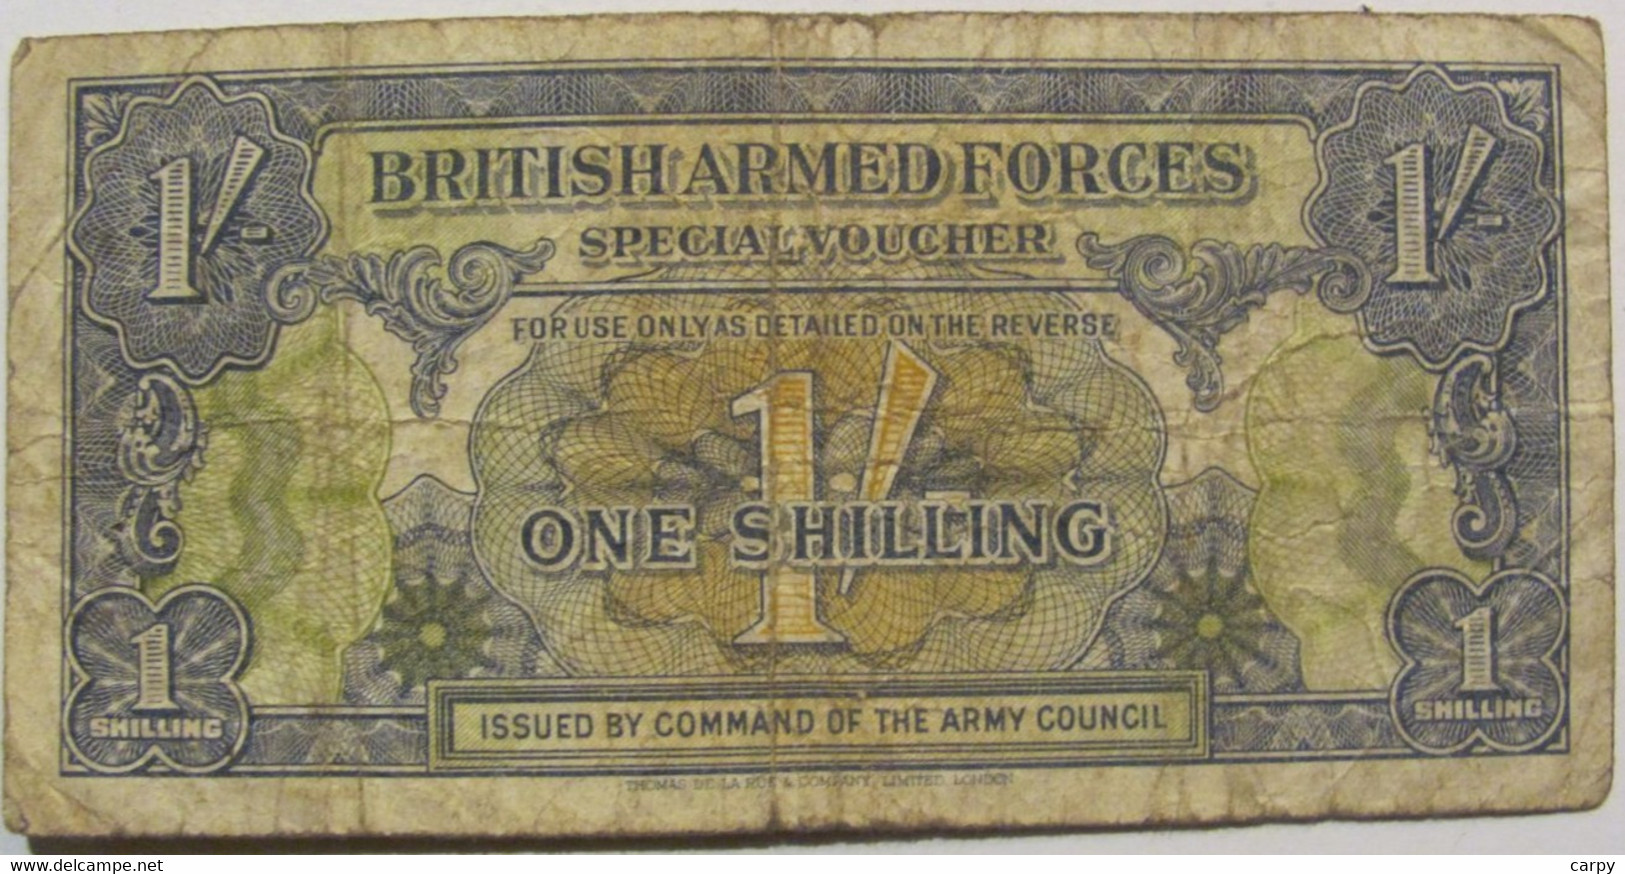 GREAT BRITAIN Shilling 1946 / British Armed Forces / First Issue / RARE - Fuerzas Armadas Británicas & Recibos Especiales